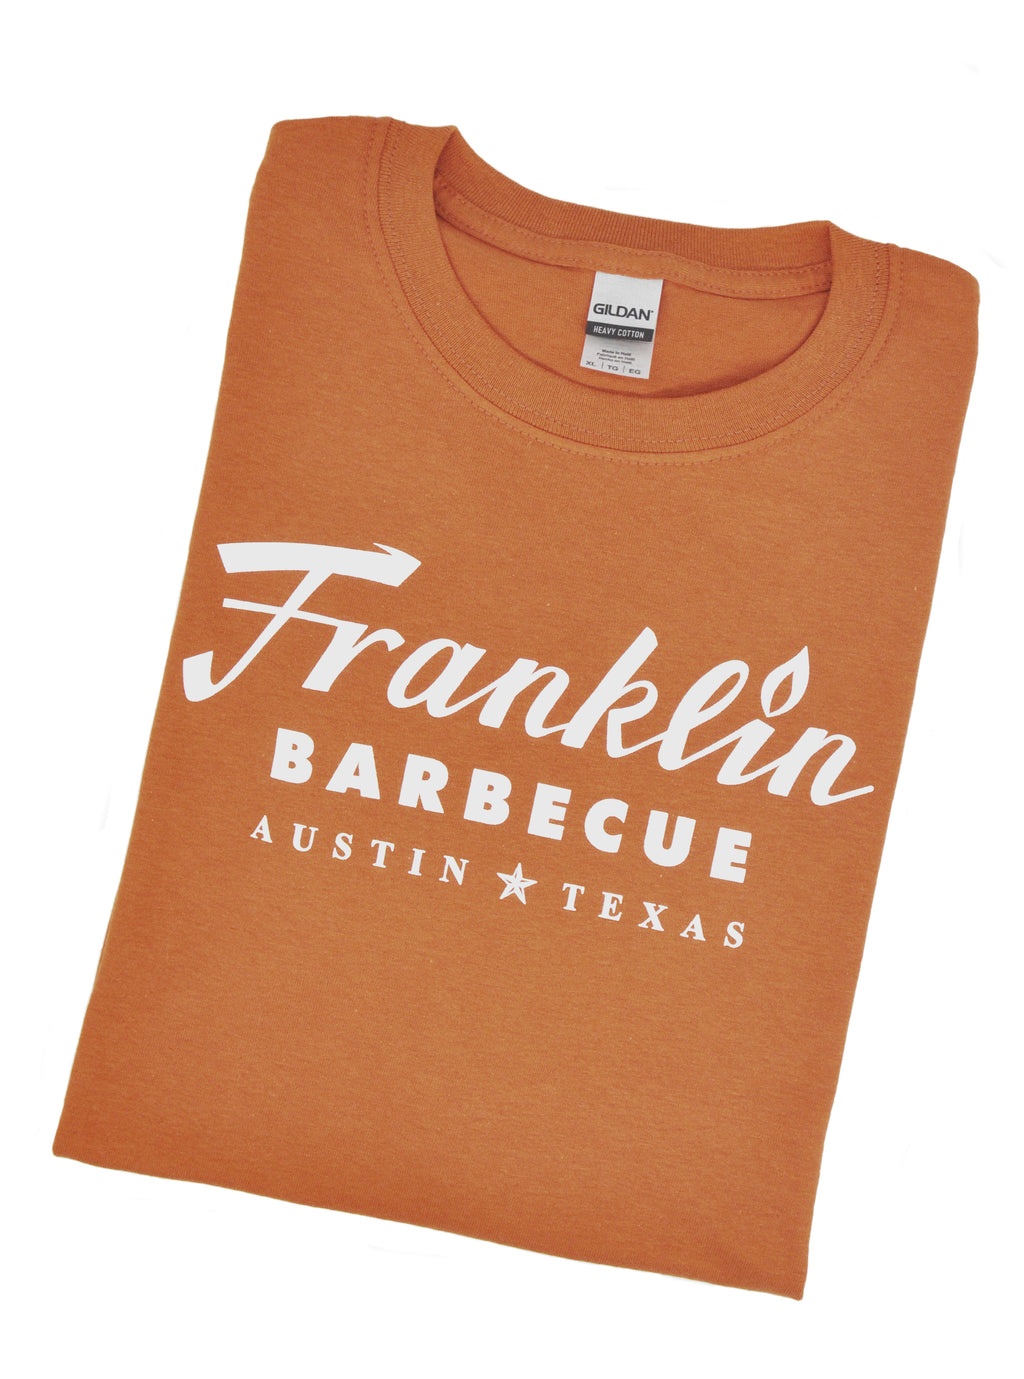 Franklin Yeti Roadie 24 – Franklin Barbecue